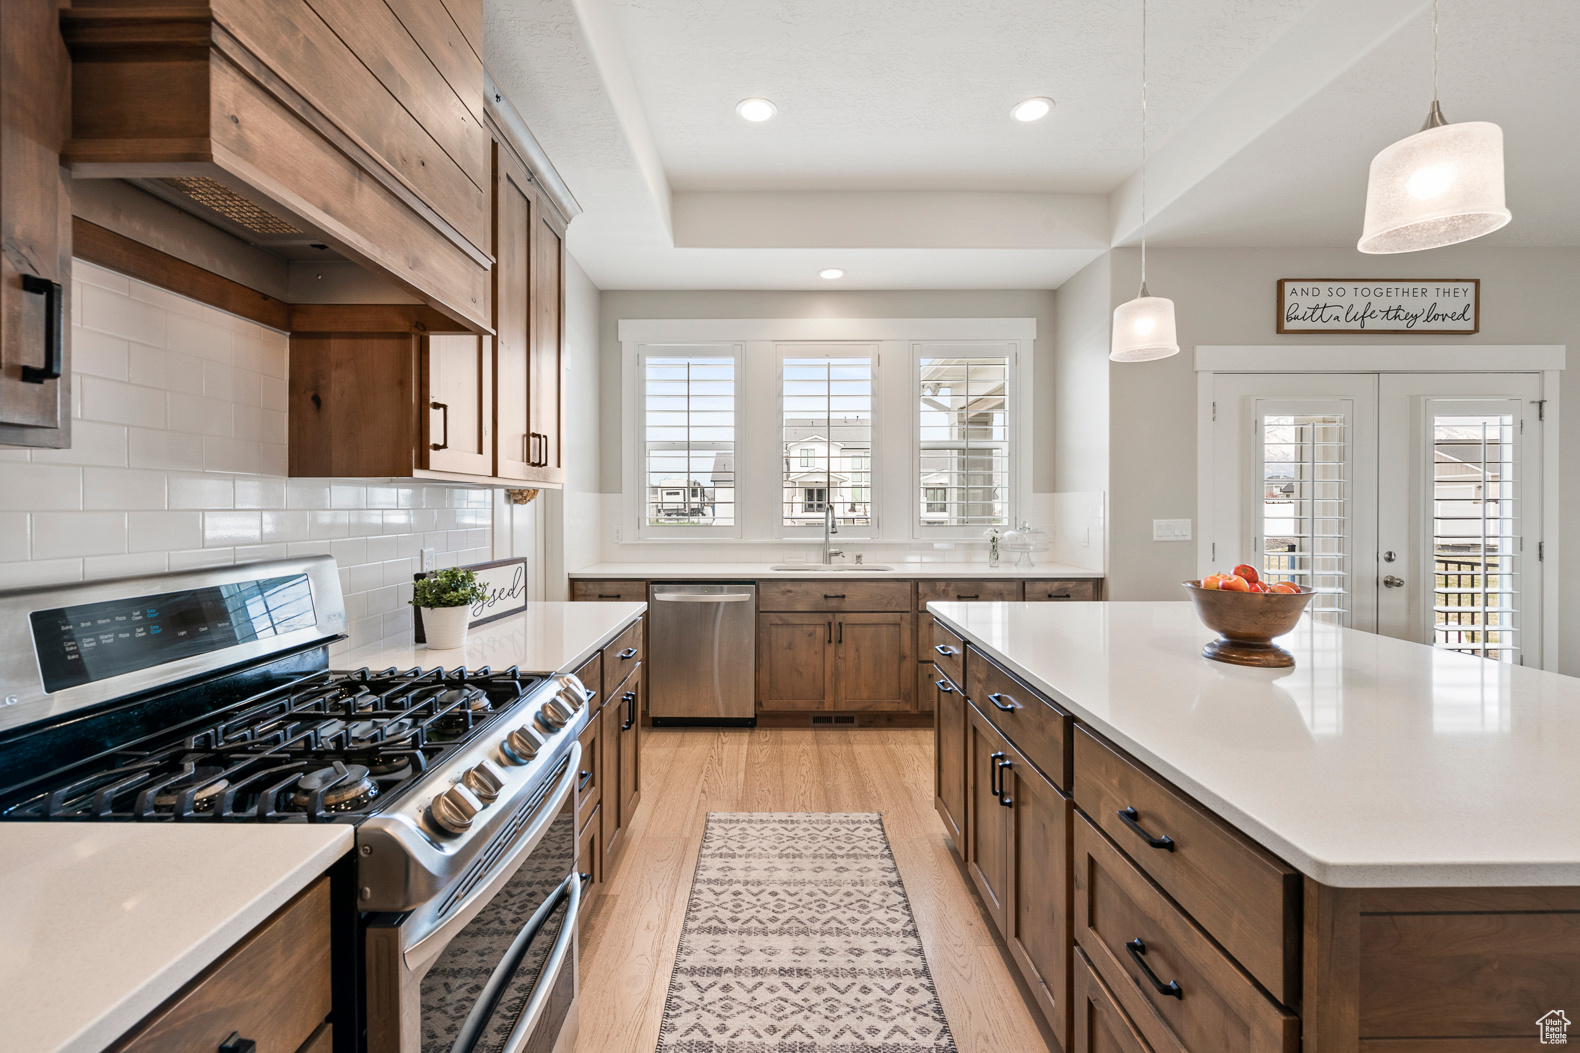 Kitchen featuring premium range hood, decorative light fixtures, backsplash, stainless steel appliances, and light hardwood / wood-style floors